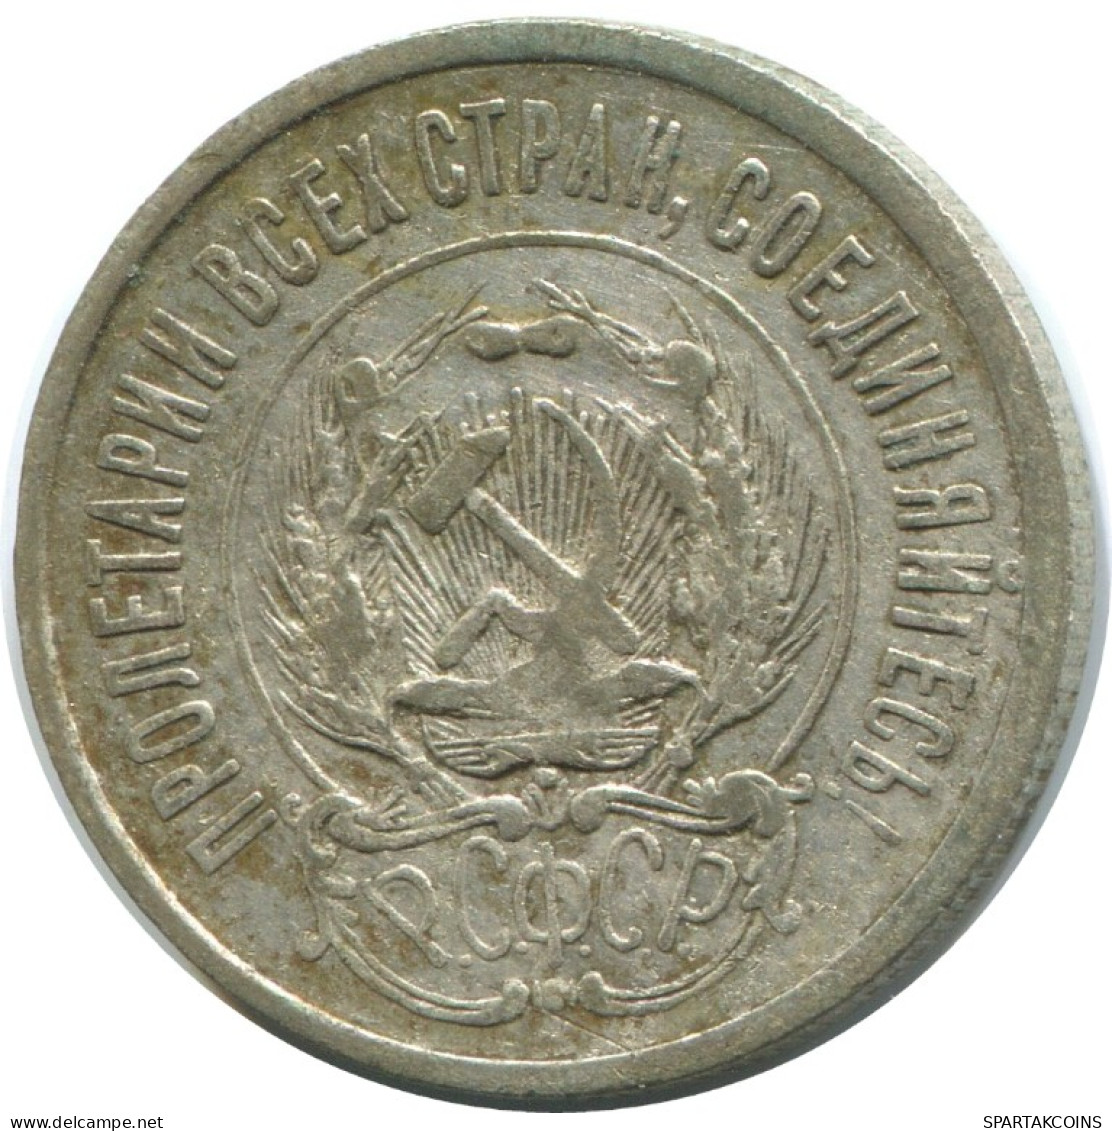 20 KOPEKS 1923 RUSSIA RSFSR SILVER Coin HIGH GRADE #AF526.4.U.A - Russia